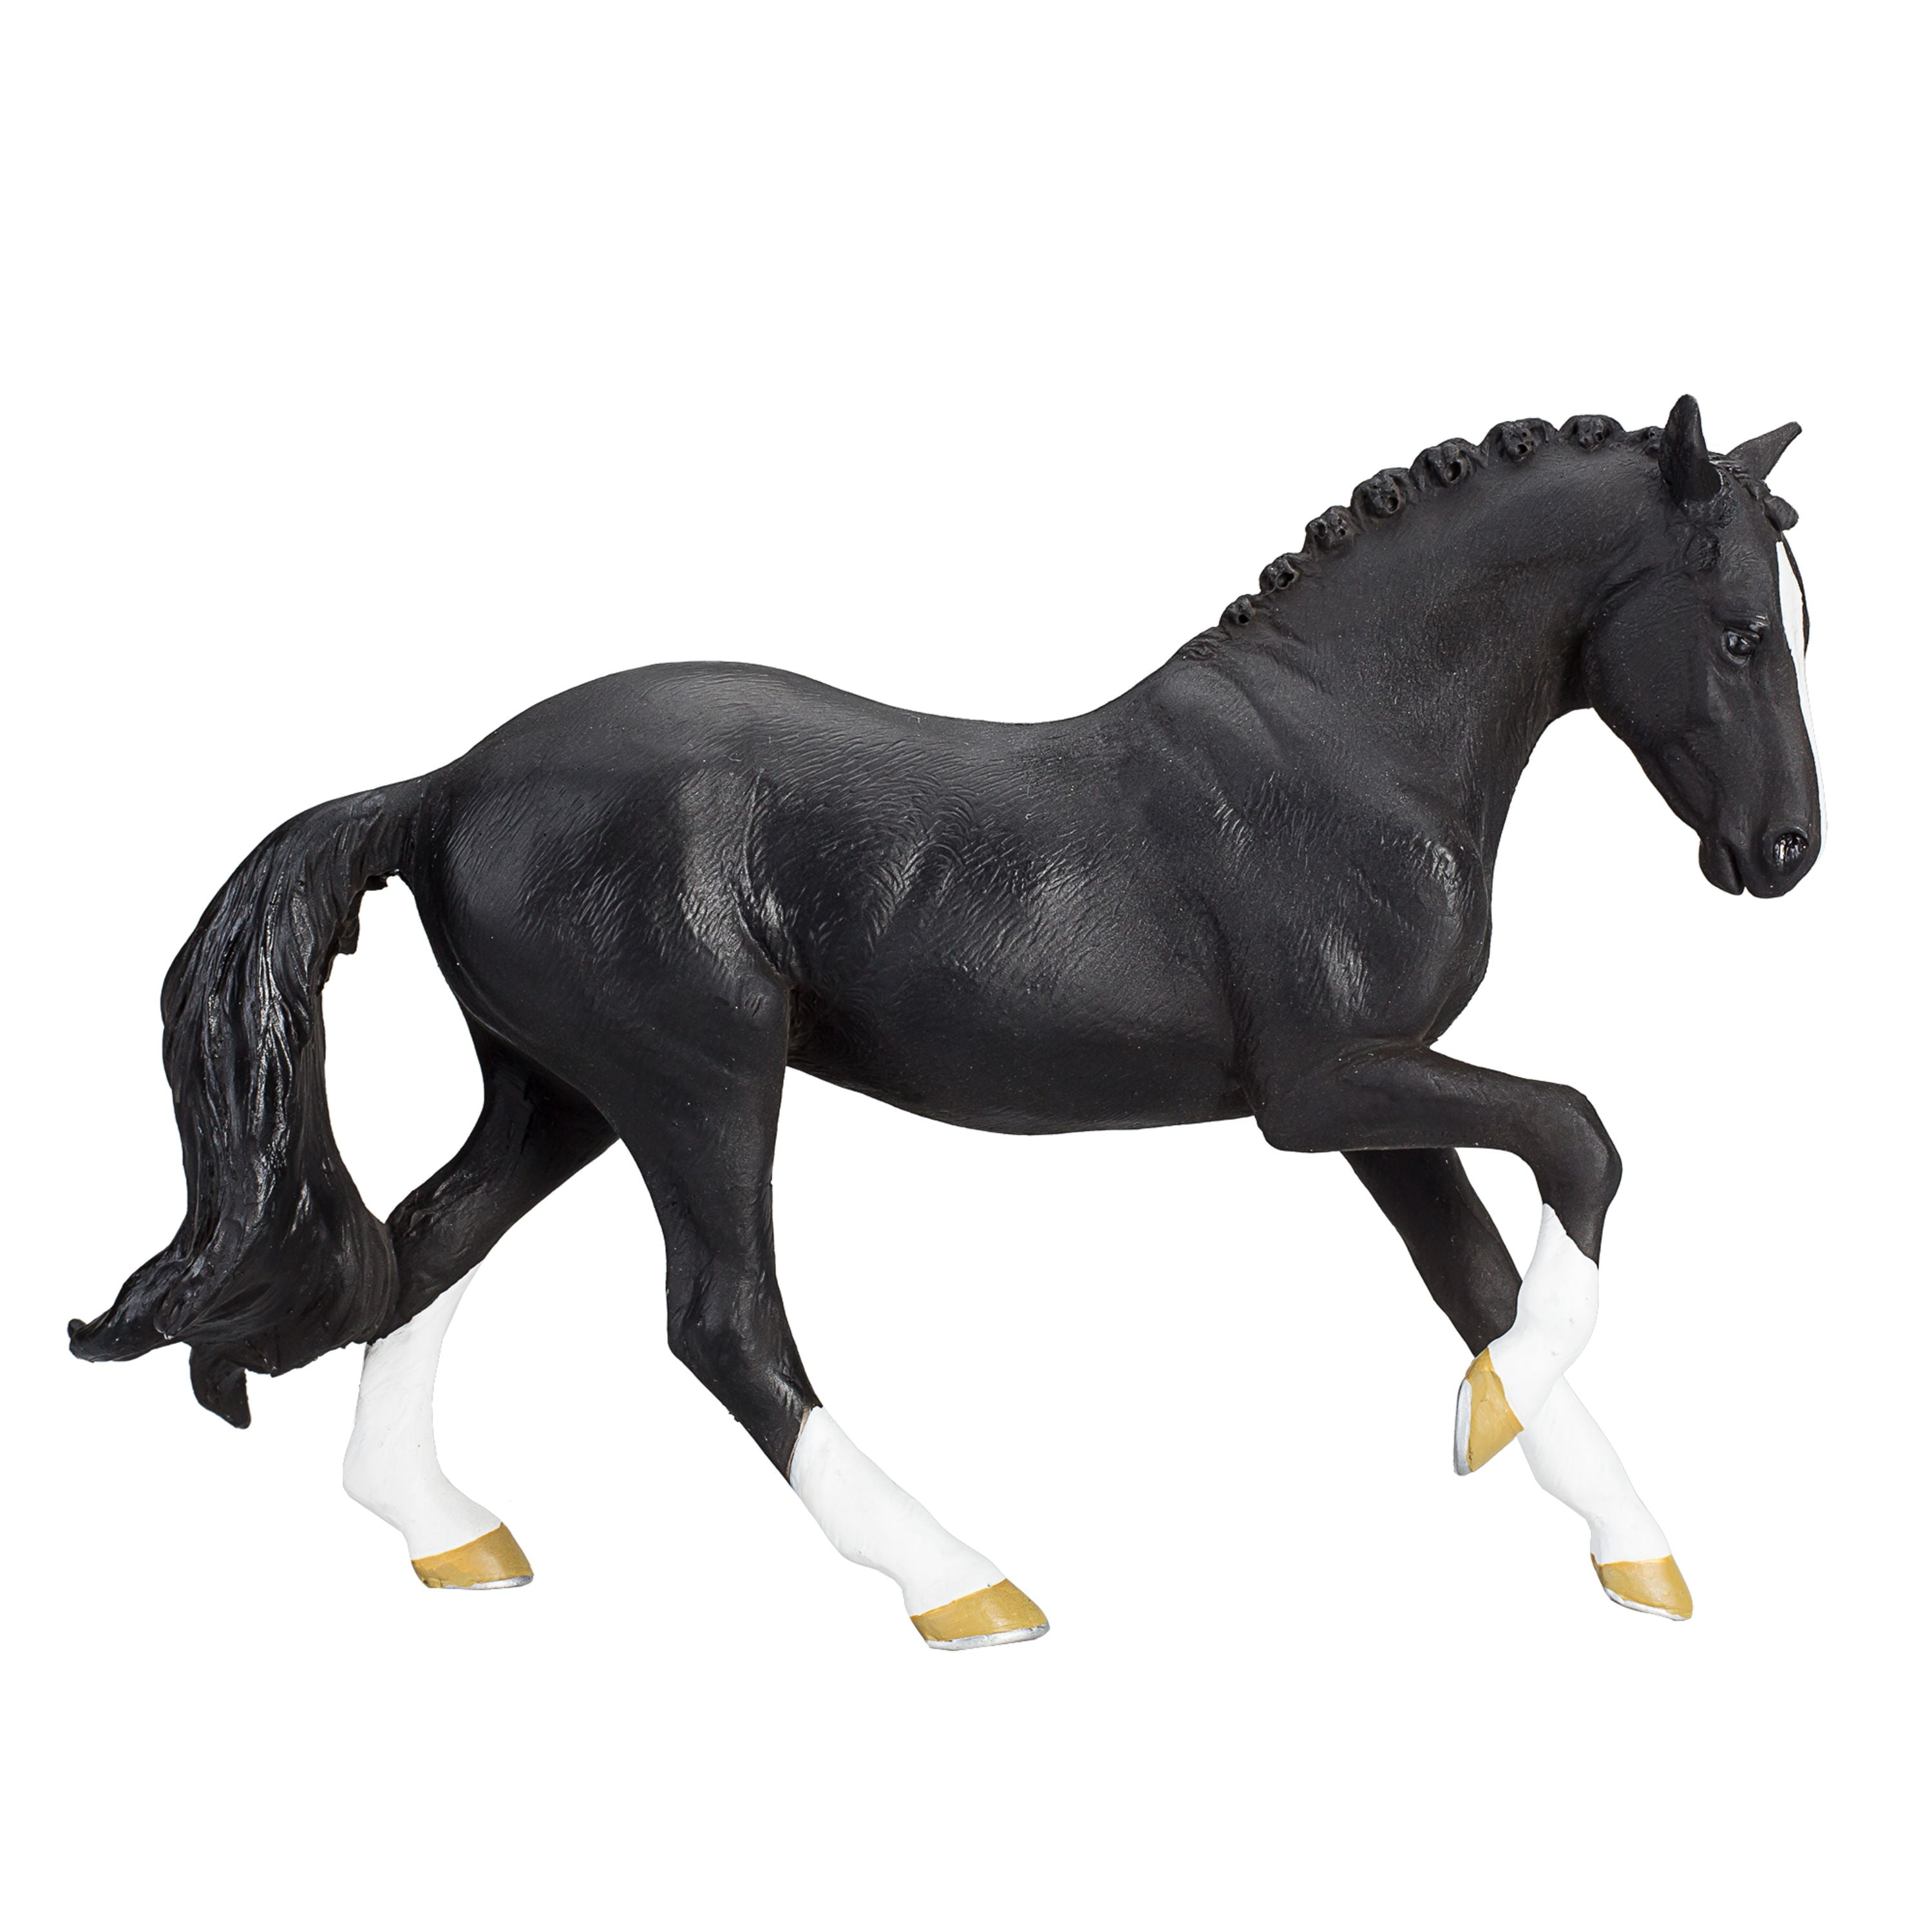 Details about   Mojo ORLOV TROTTER HORSE toy model figure kid girls plastic animal farm figurine 